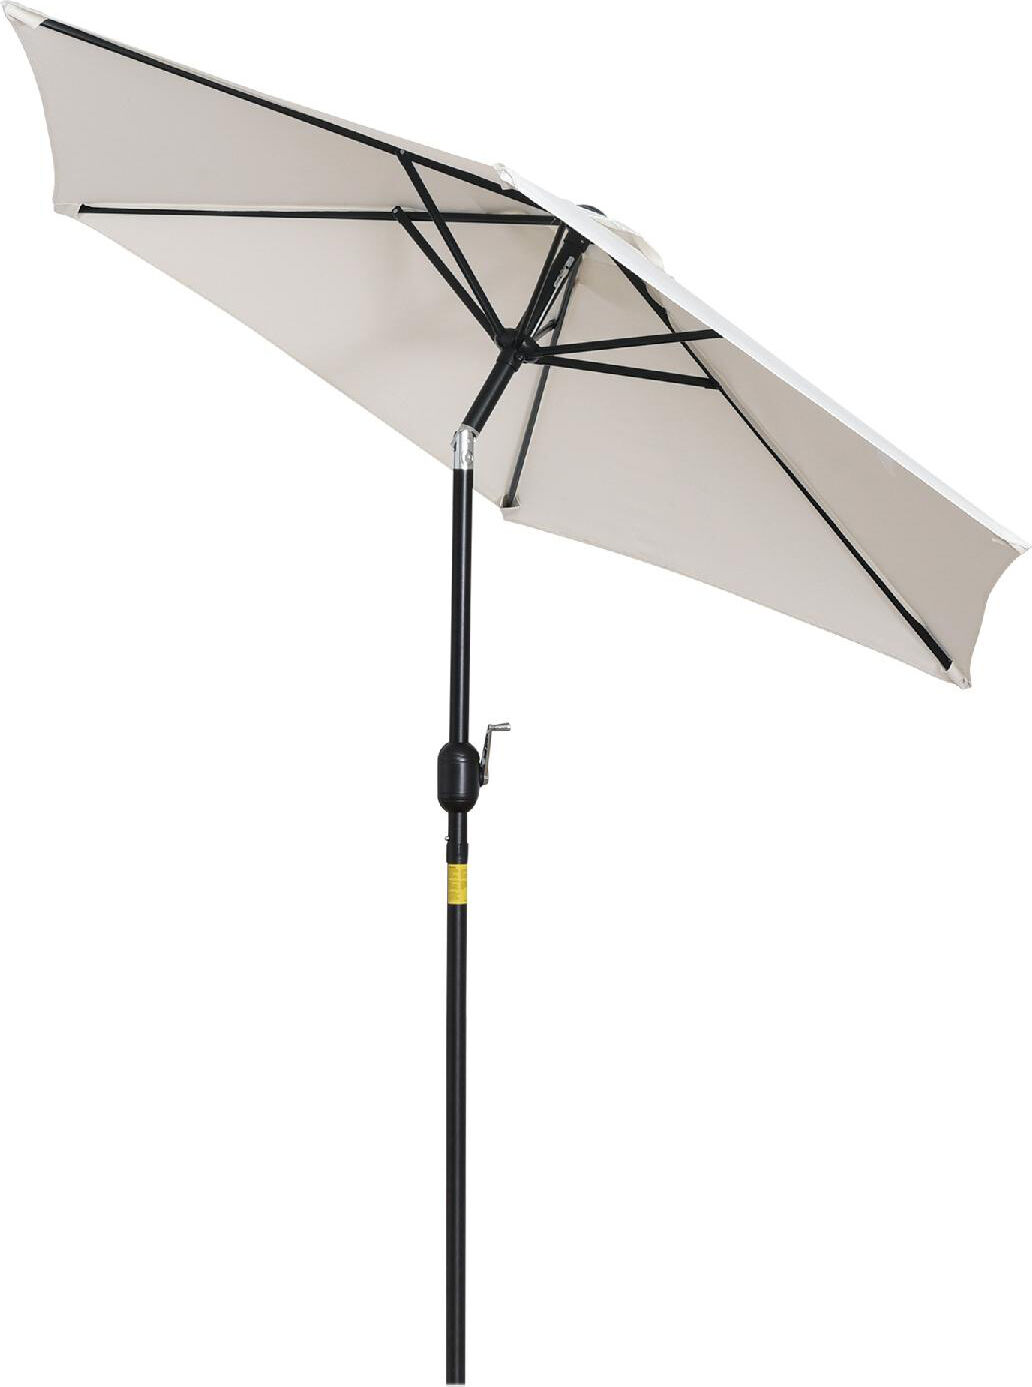 vivagarden 117cw84d ombrellone da giardino Ø 2.3 mt in metallo telo in poliestere apertura a manovella colore bianco crema - 117cw84d